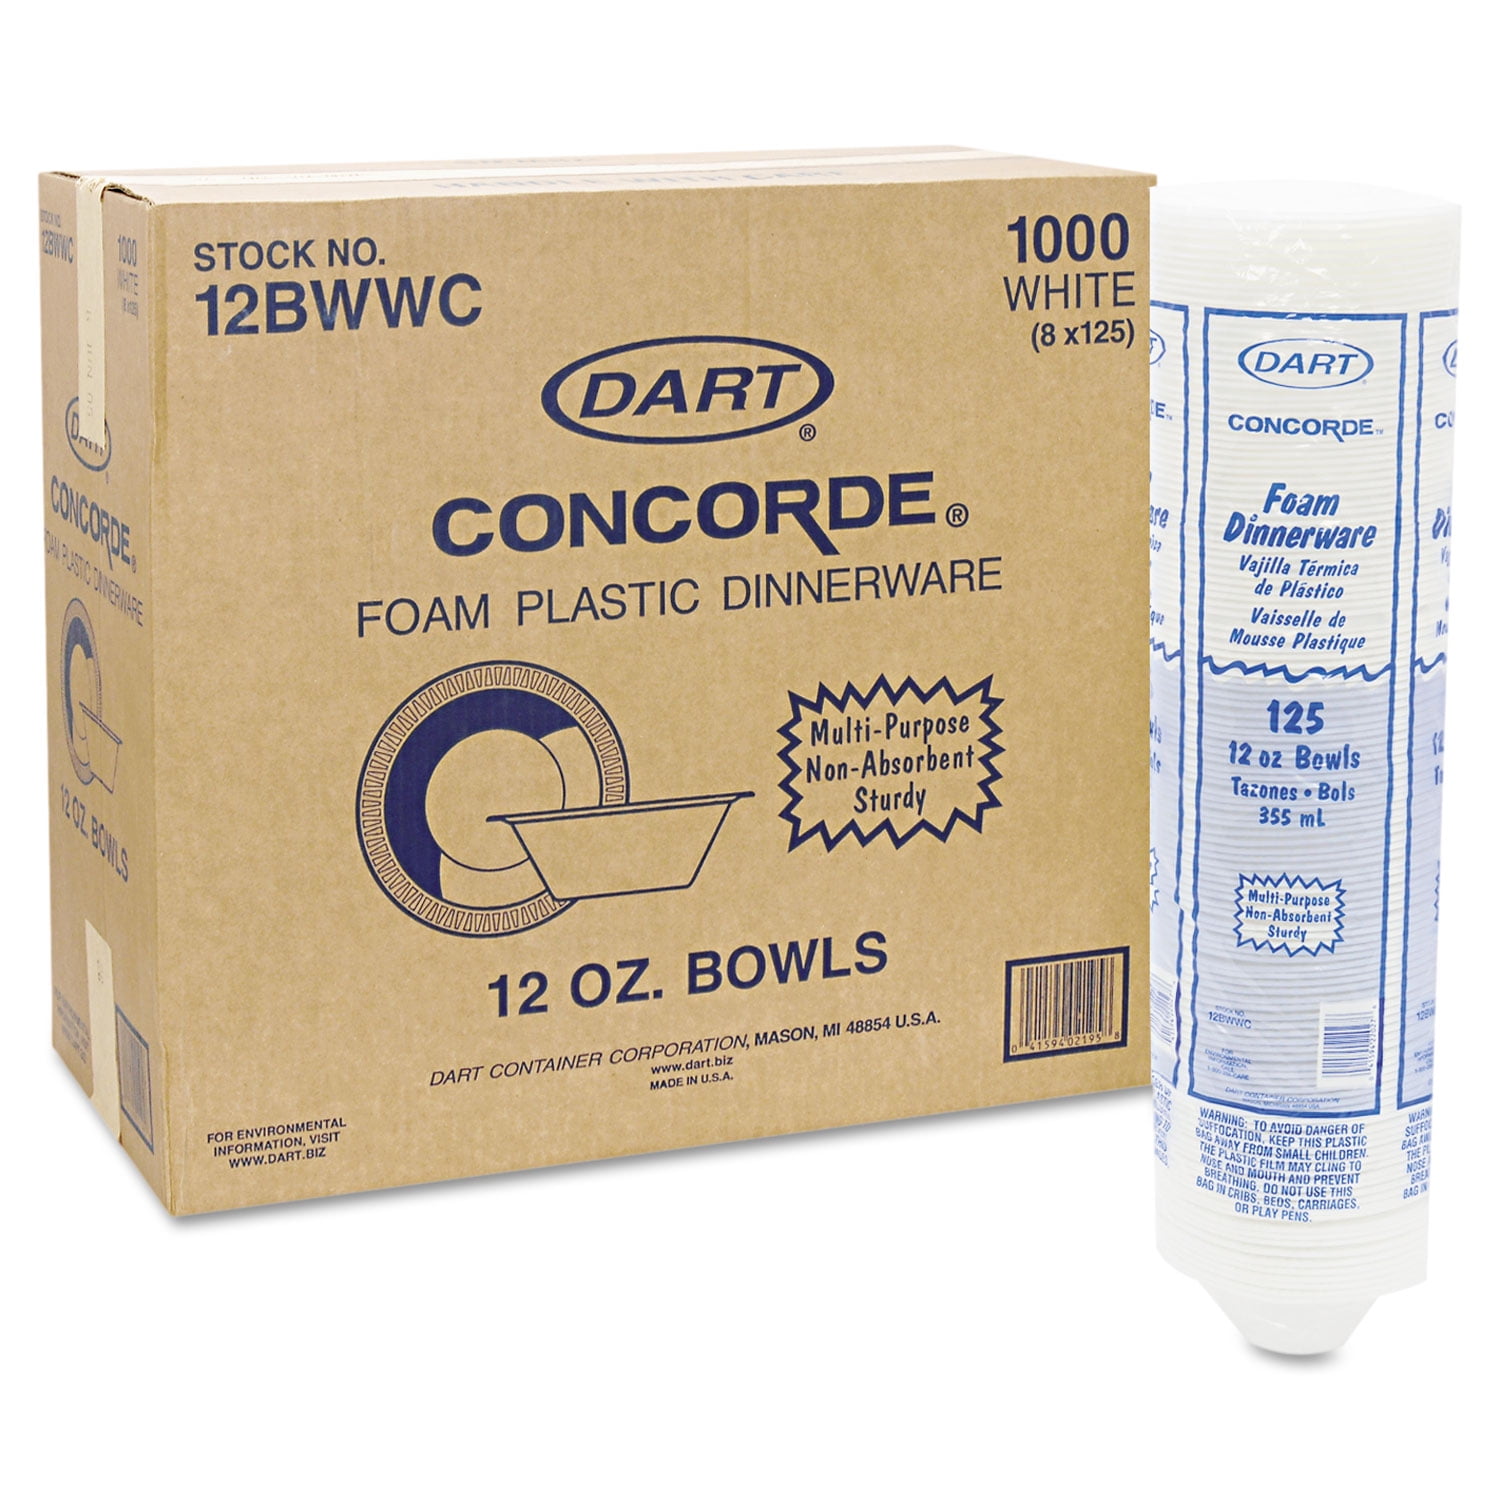 12BWWCR 721690 Solo Concorde Foam Bowls 12 oz White 125/Pack 